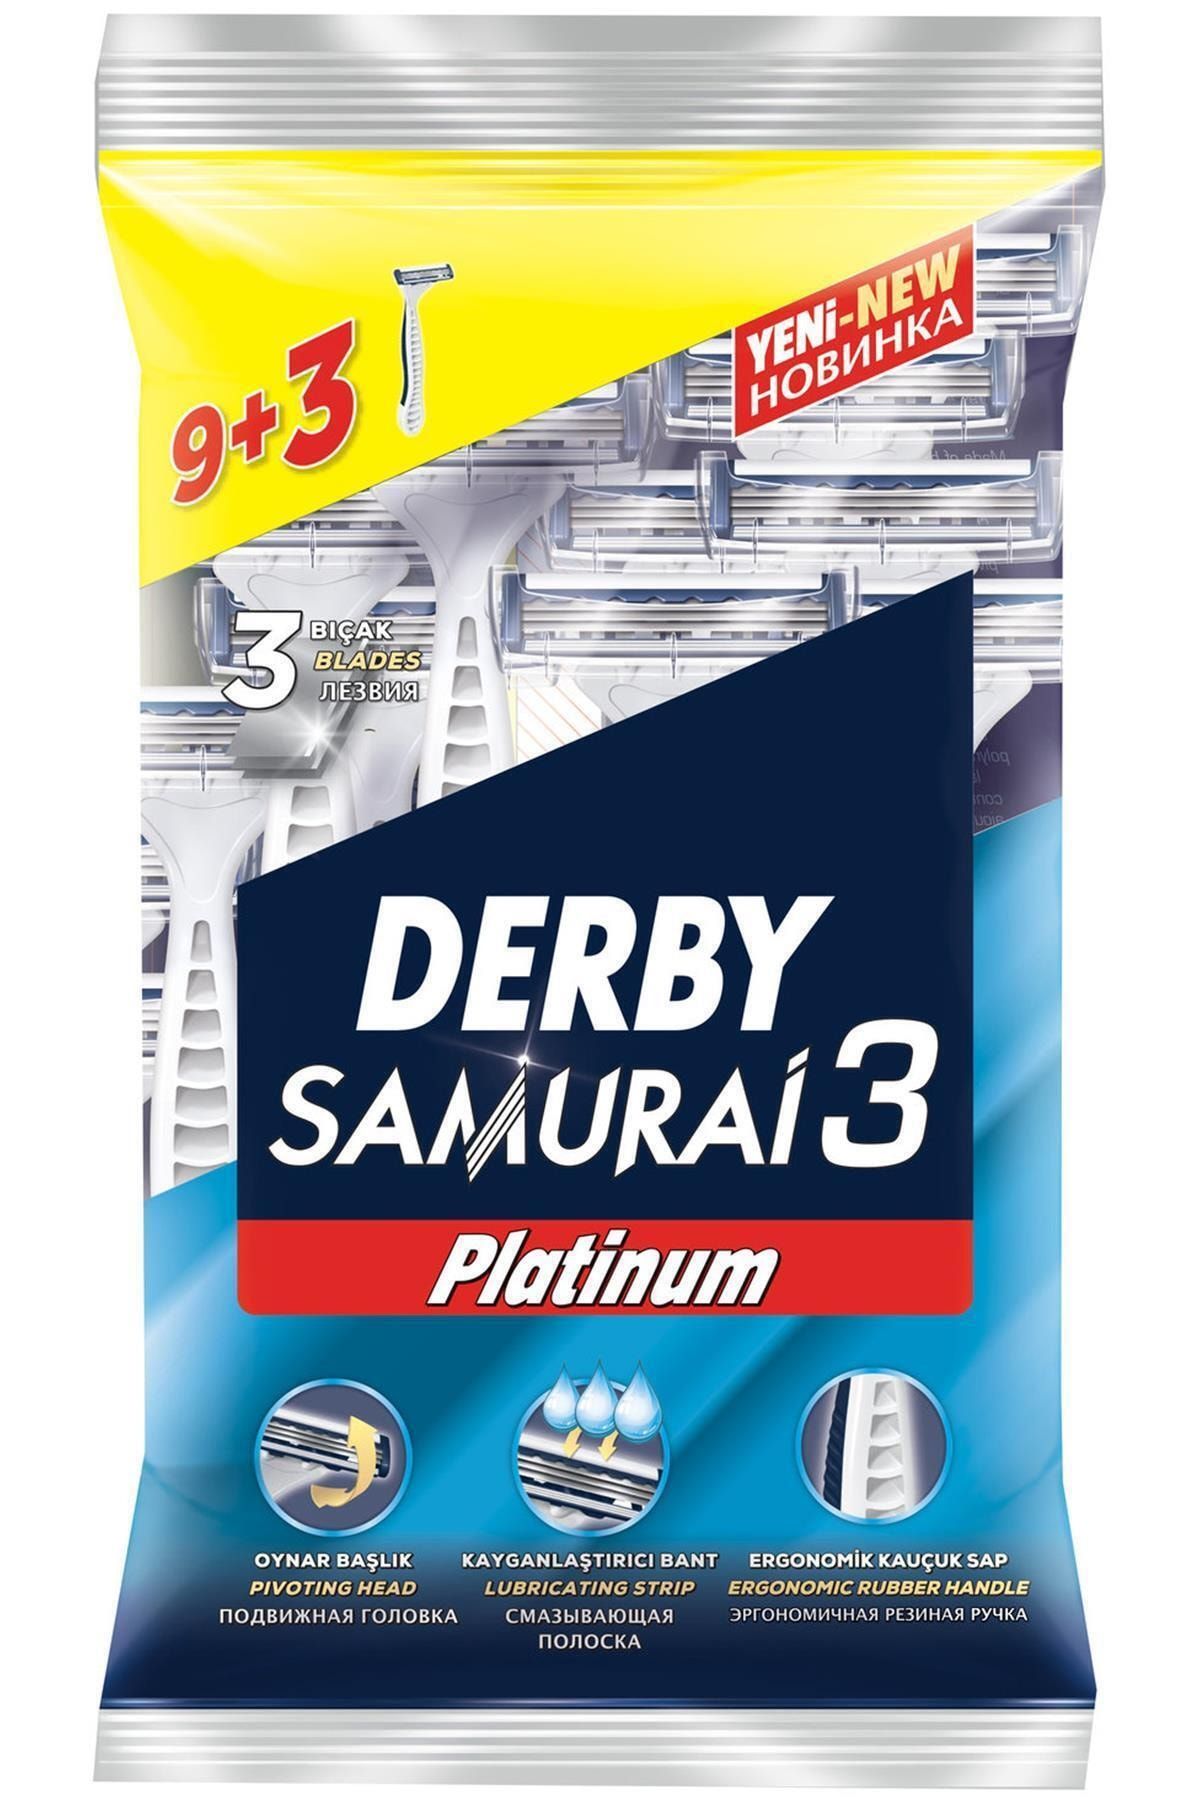 Derby Marka: Samurai 3 Platinum 9+3 Poşet Kategori: Tıraş Aksesuarı